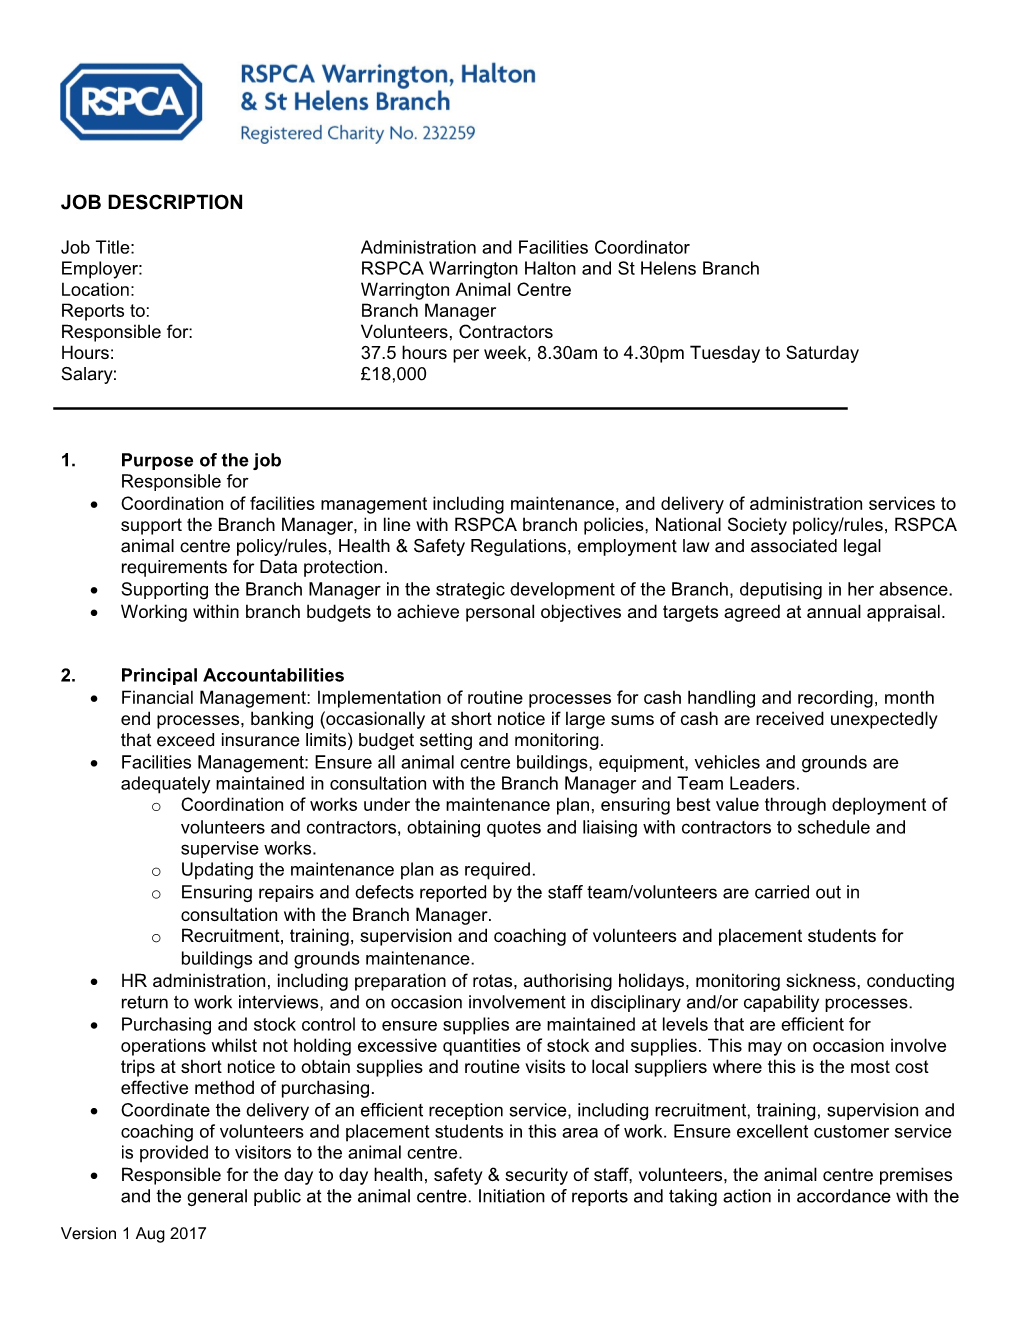 Job Title:Administration and Facilities Coordinator